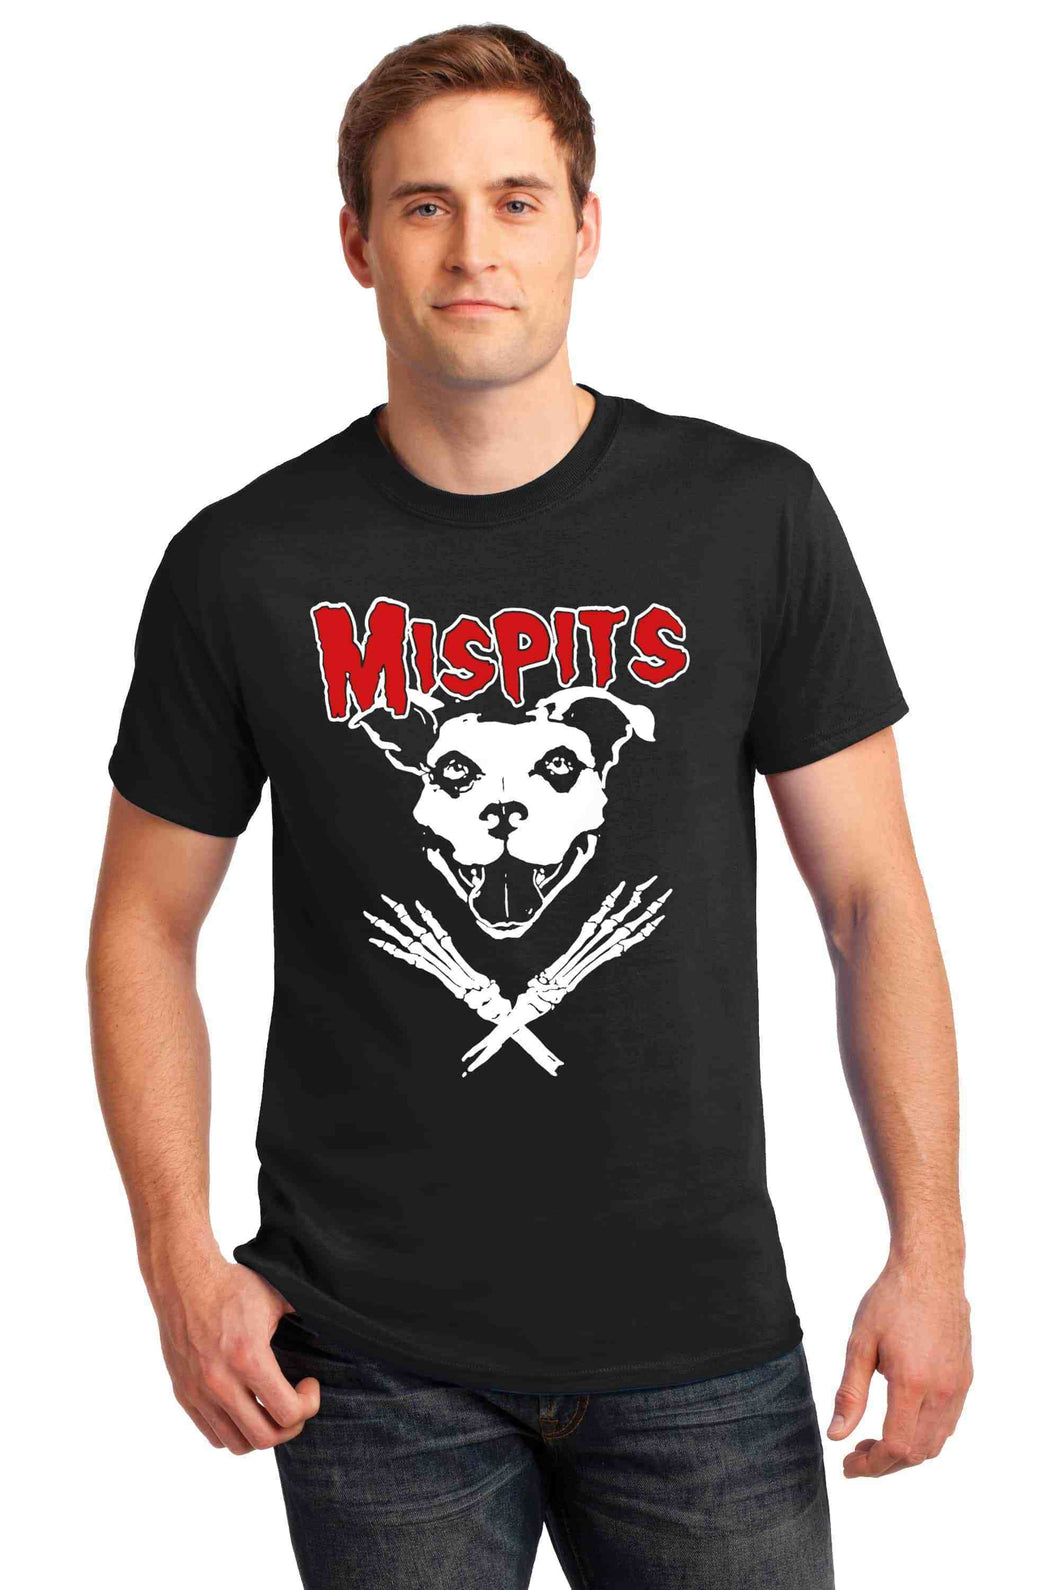 Mispits Men's/Unisex or Women's T-shirt